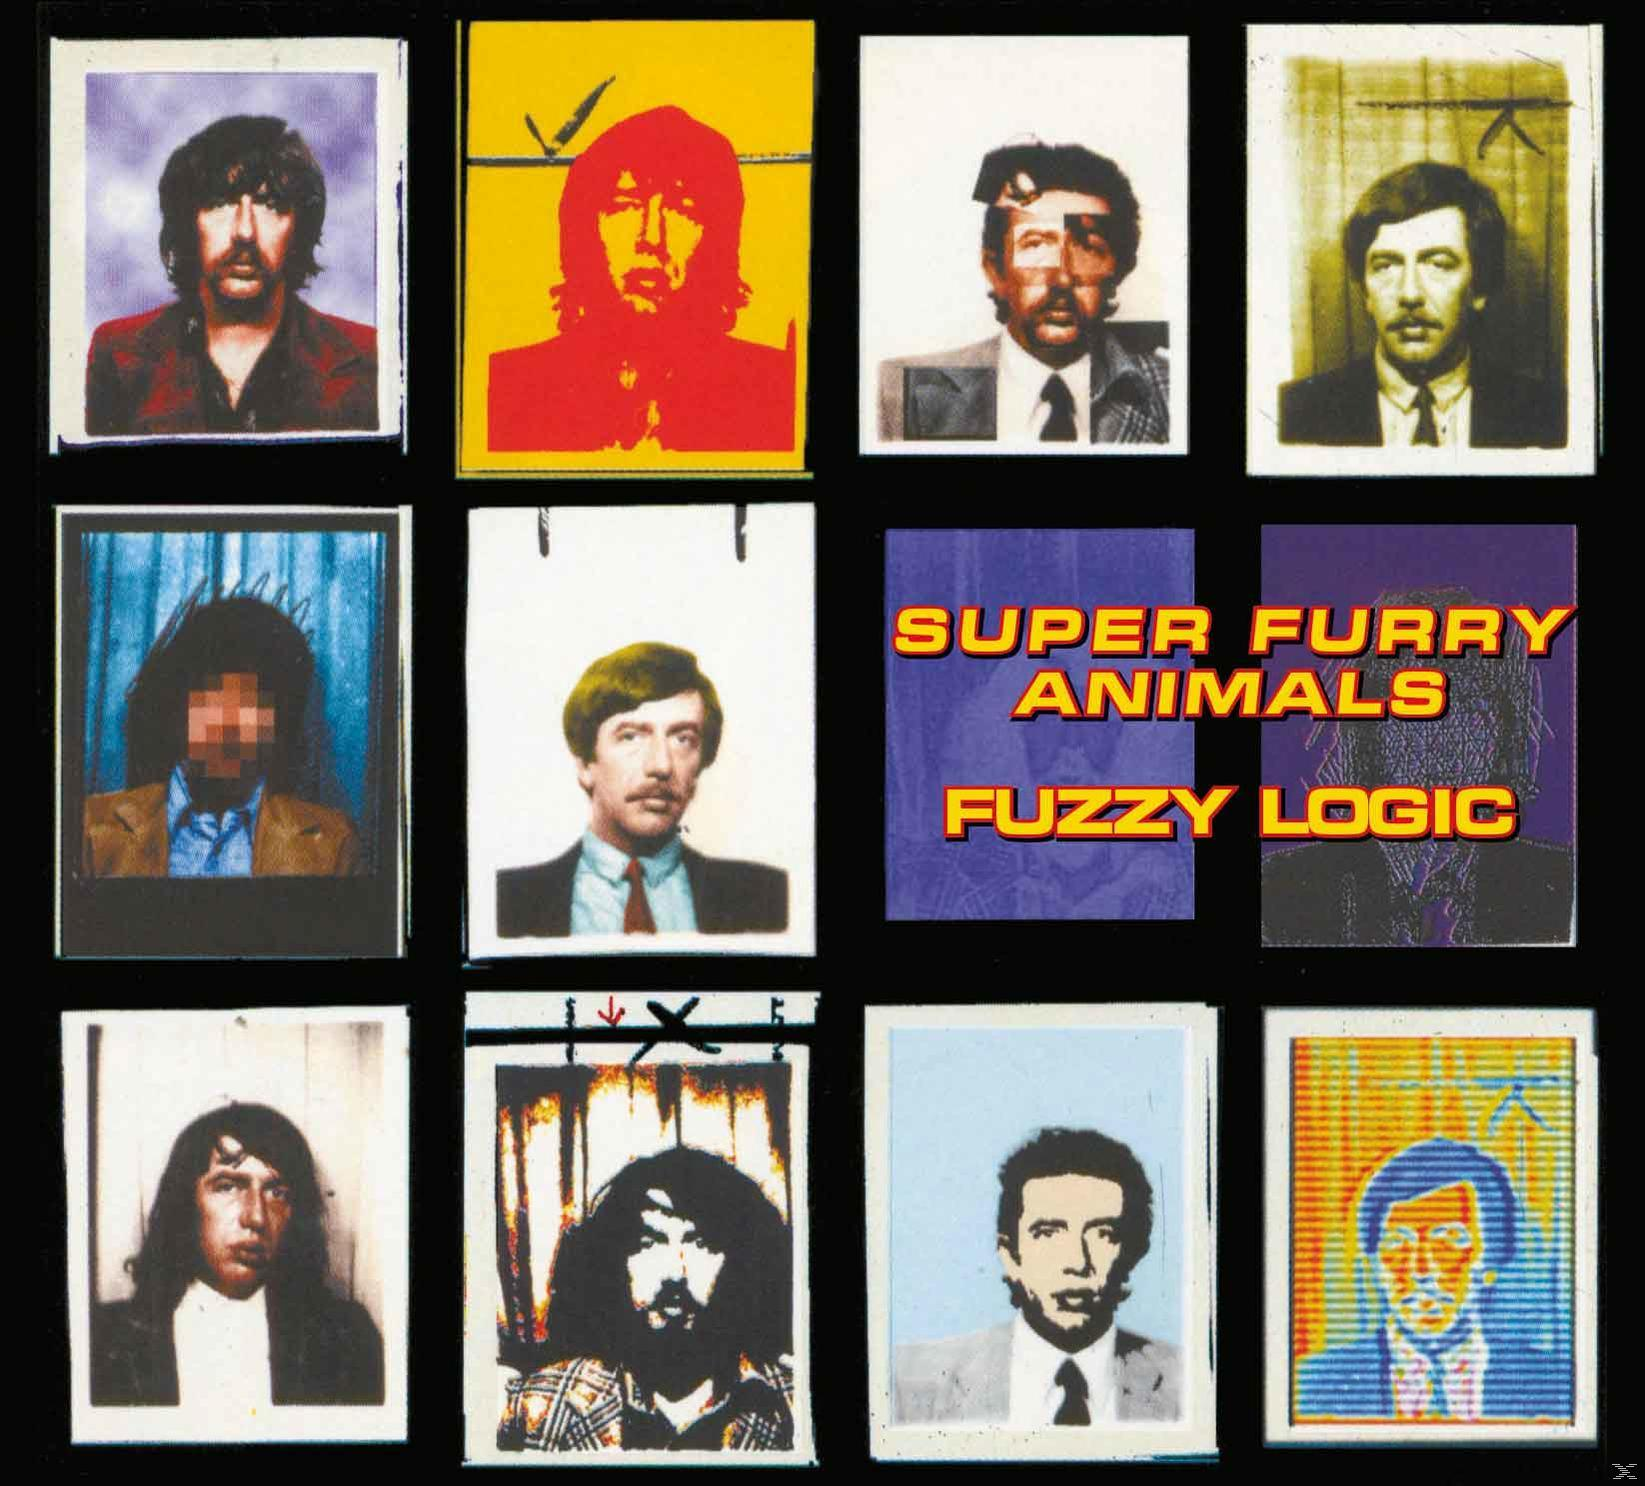 Super Furry - Anniversary Edition) - Logic Animals Deluxe Fuzzy (20th (Vinyl)